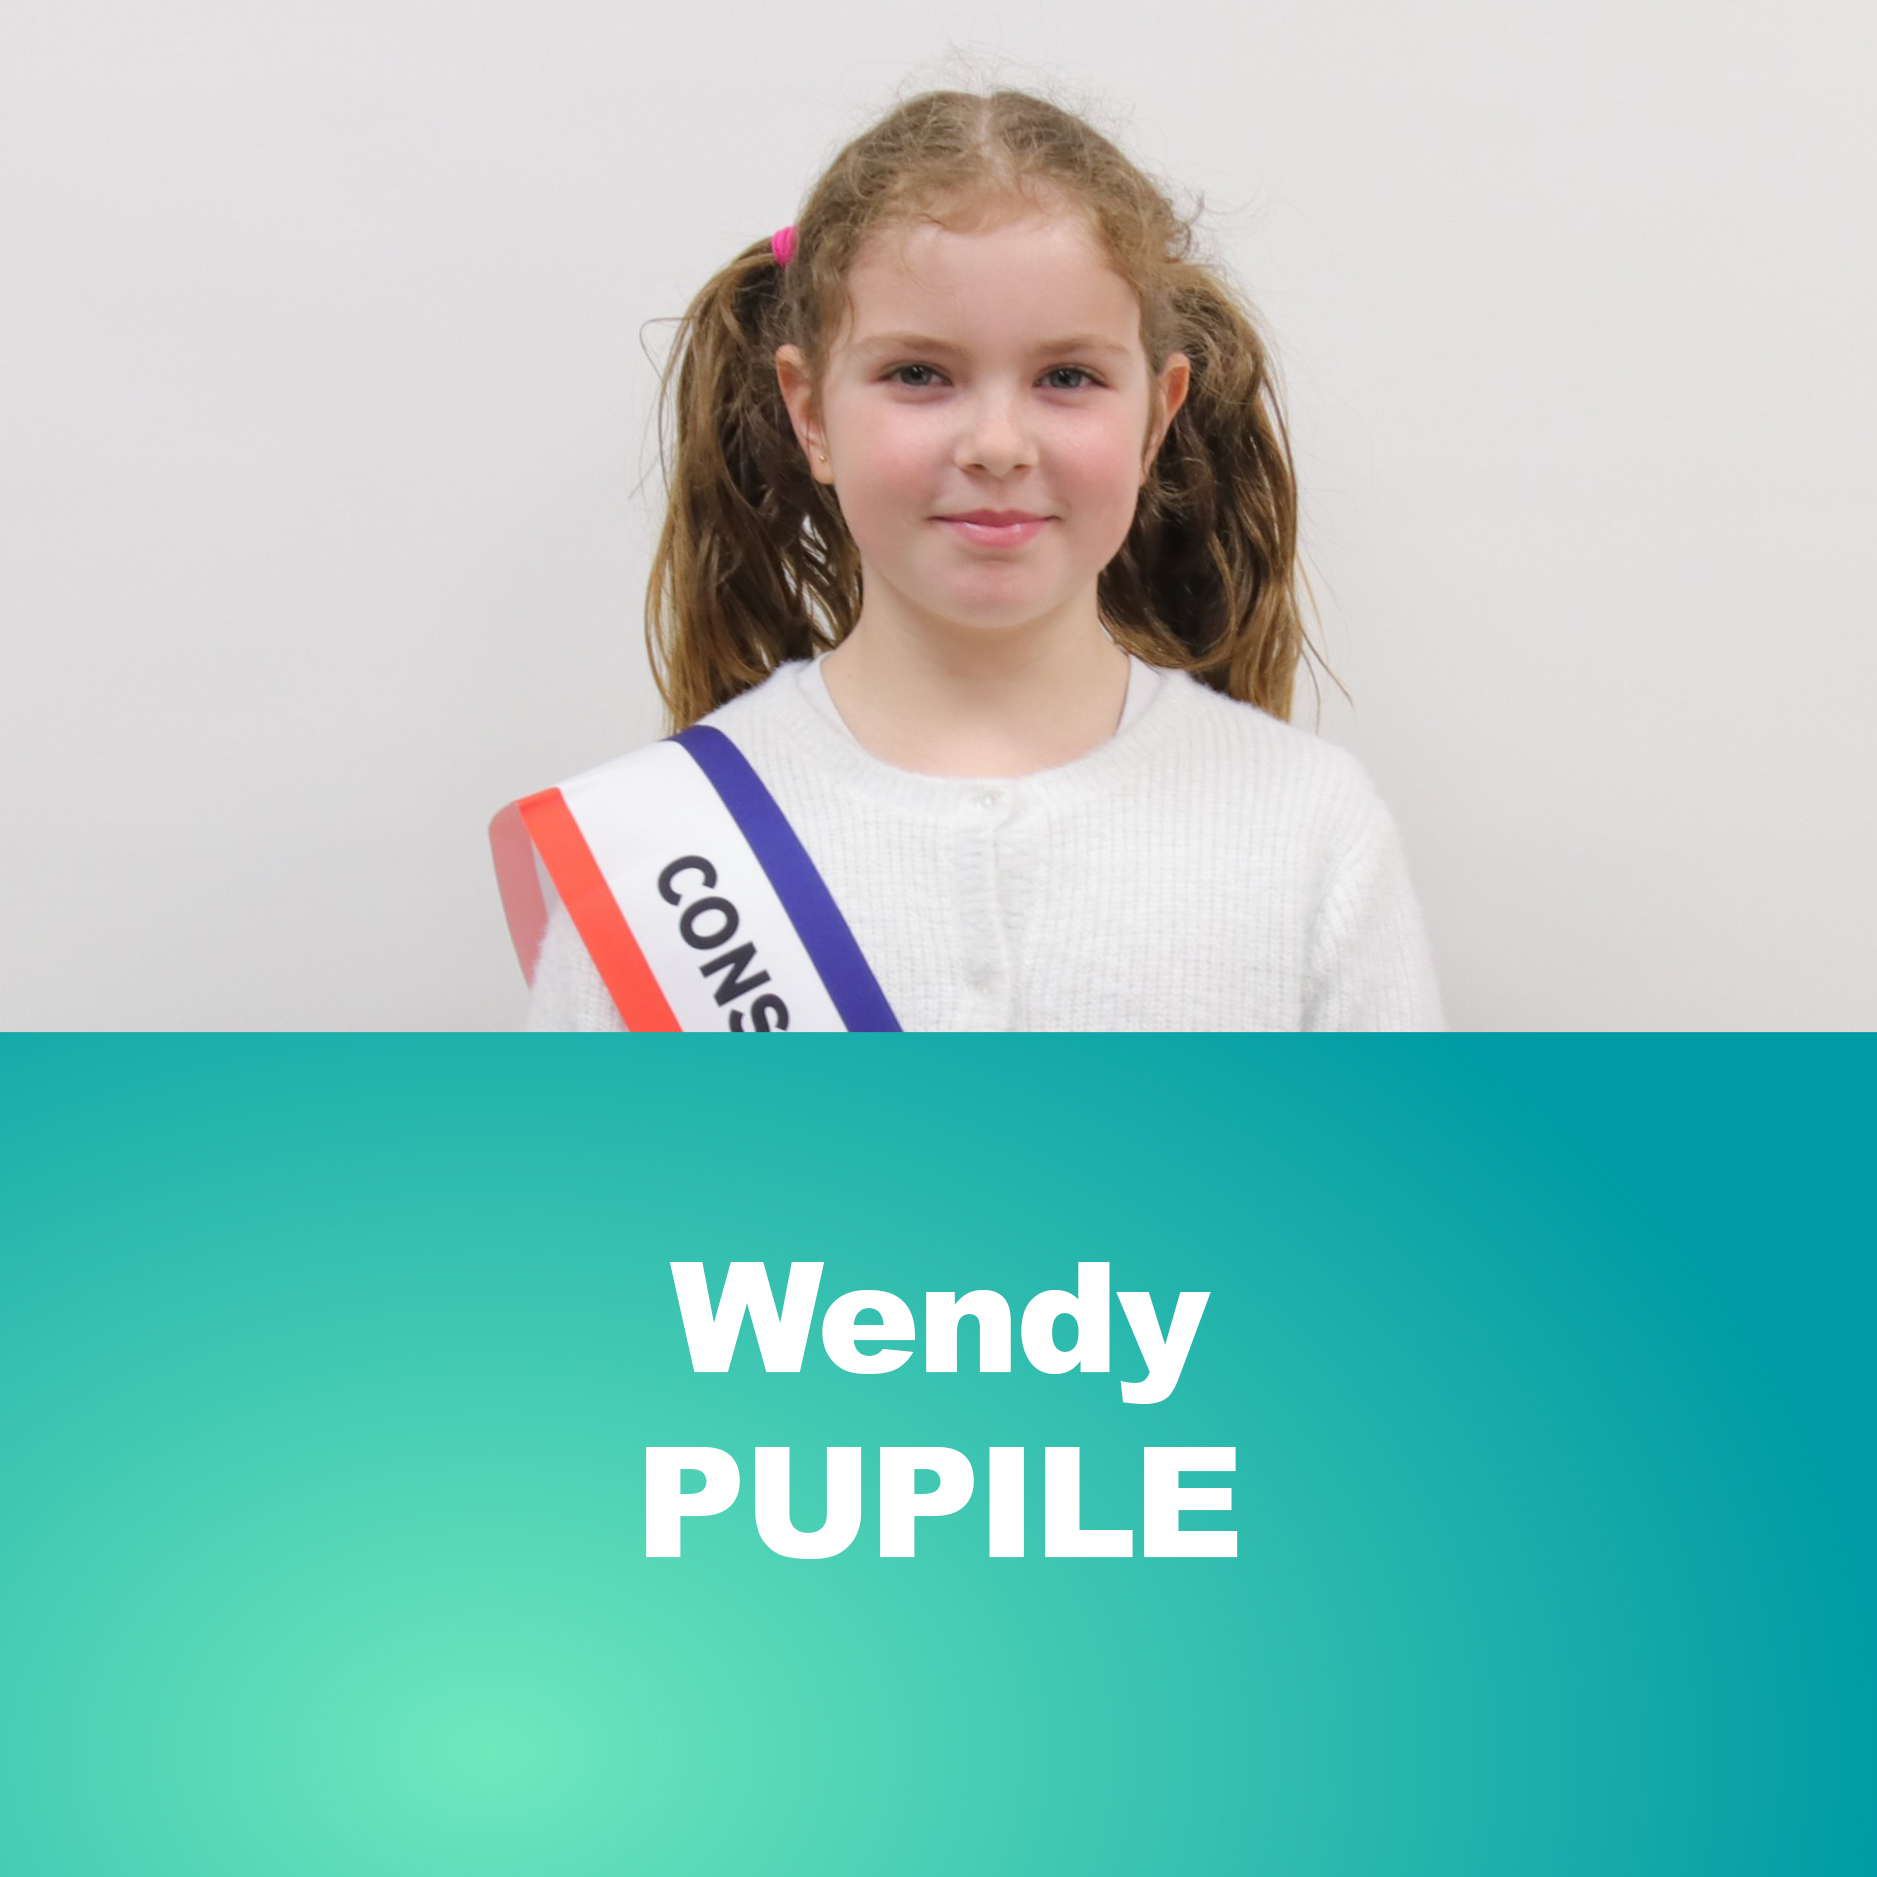 WENDY-PUPILE.jpg